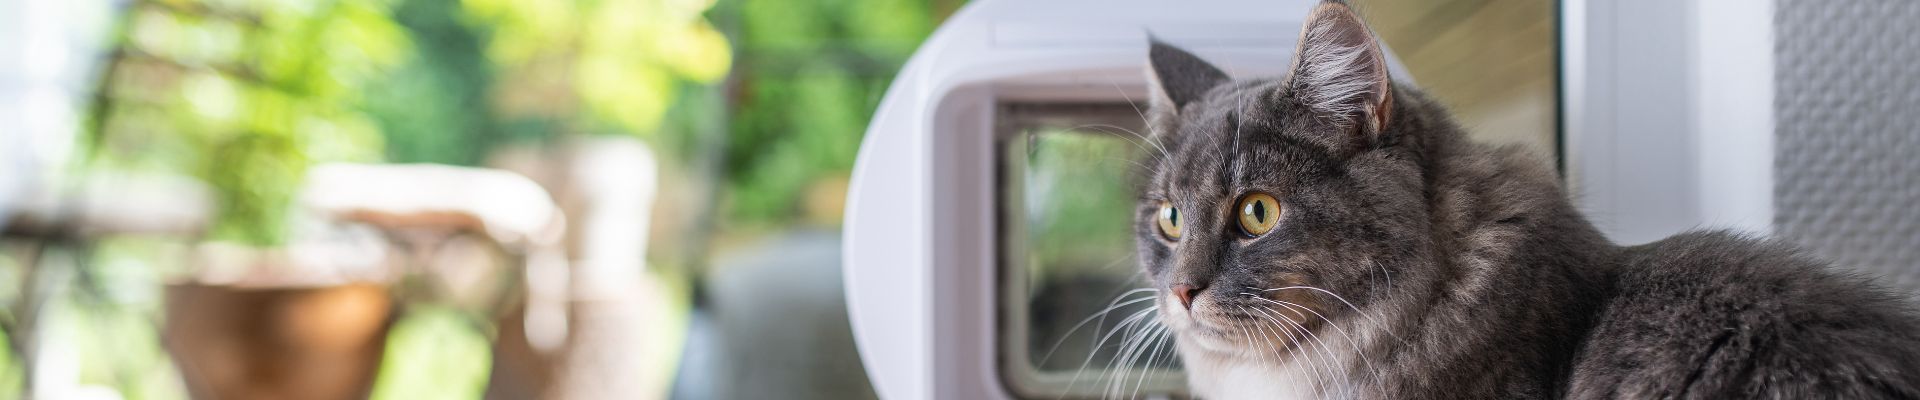 pancarta de un esponjoso gato gris junto a una ventana